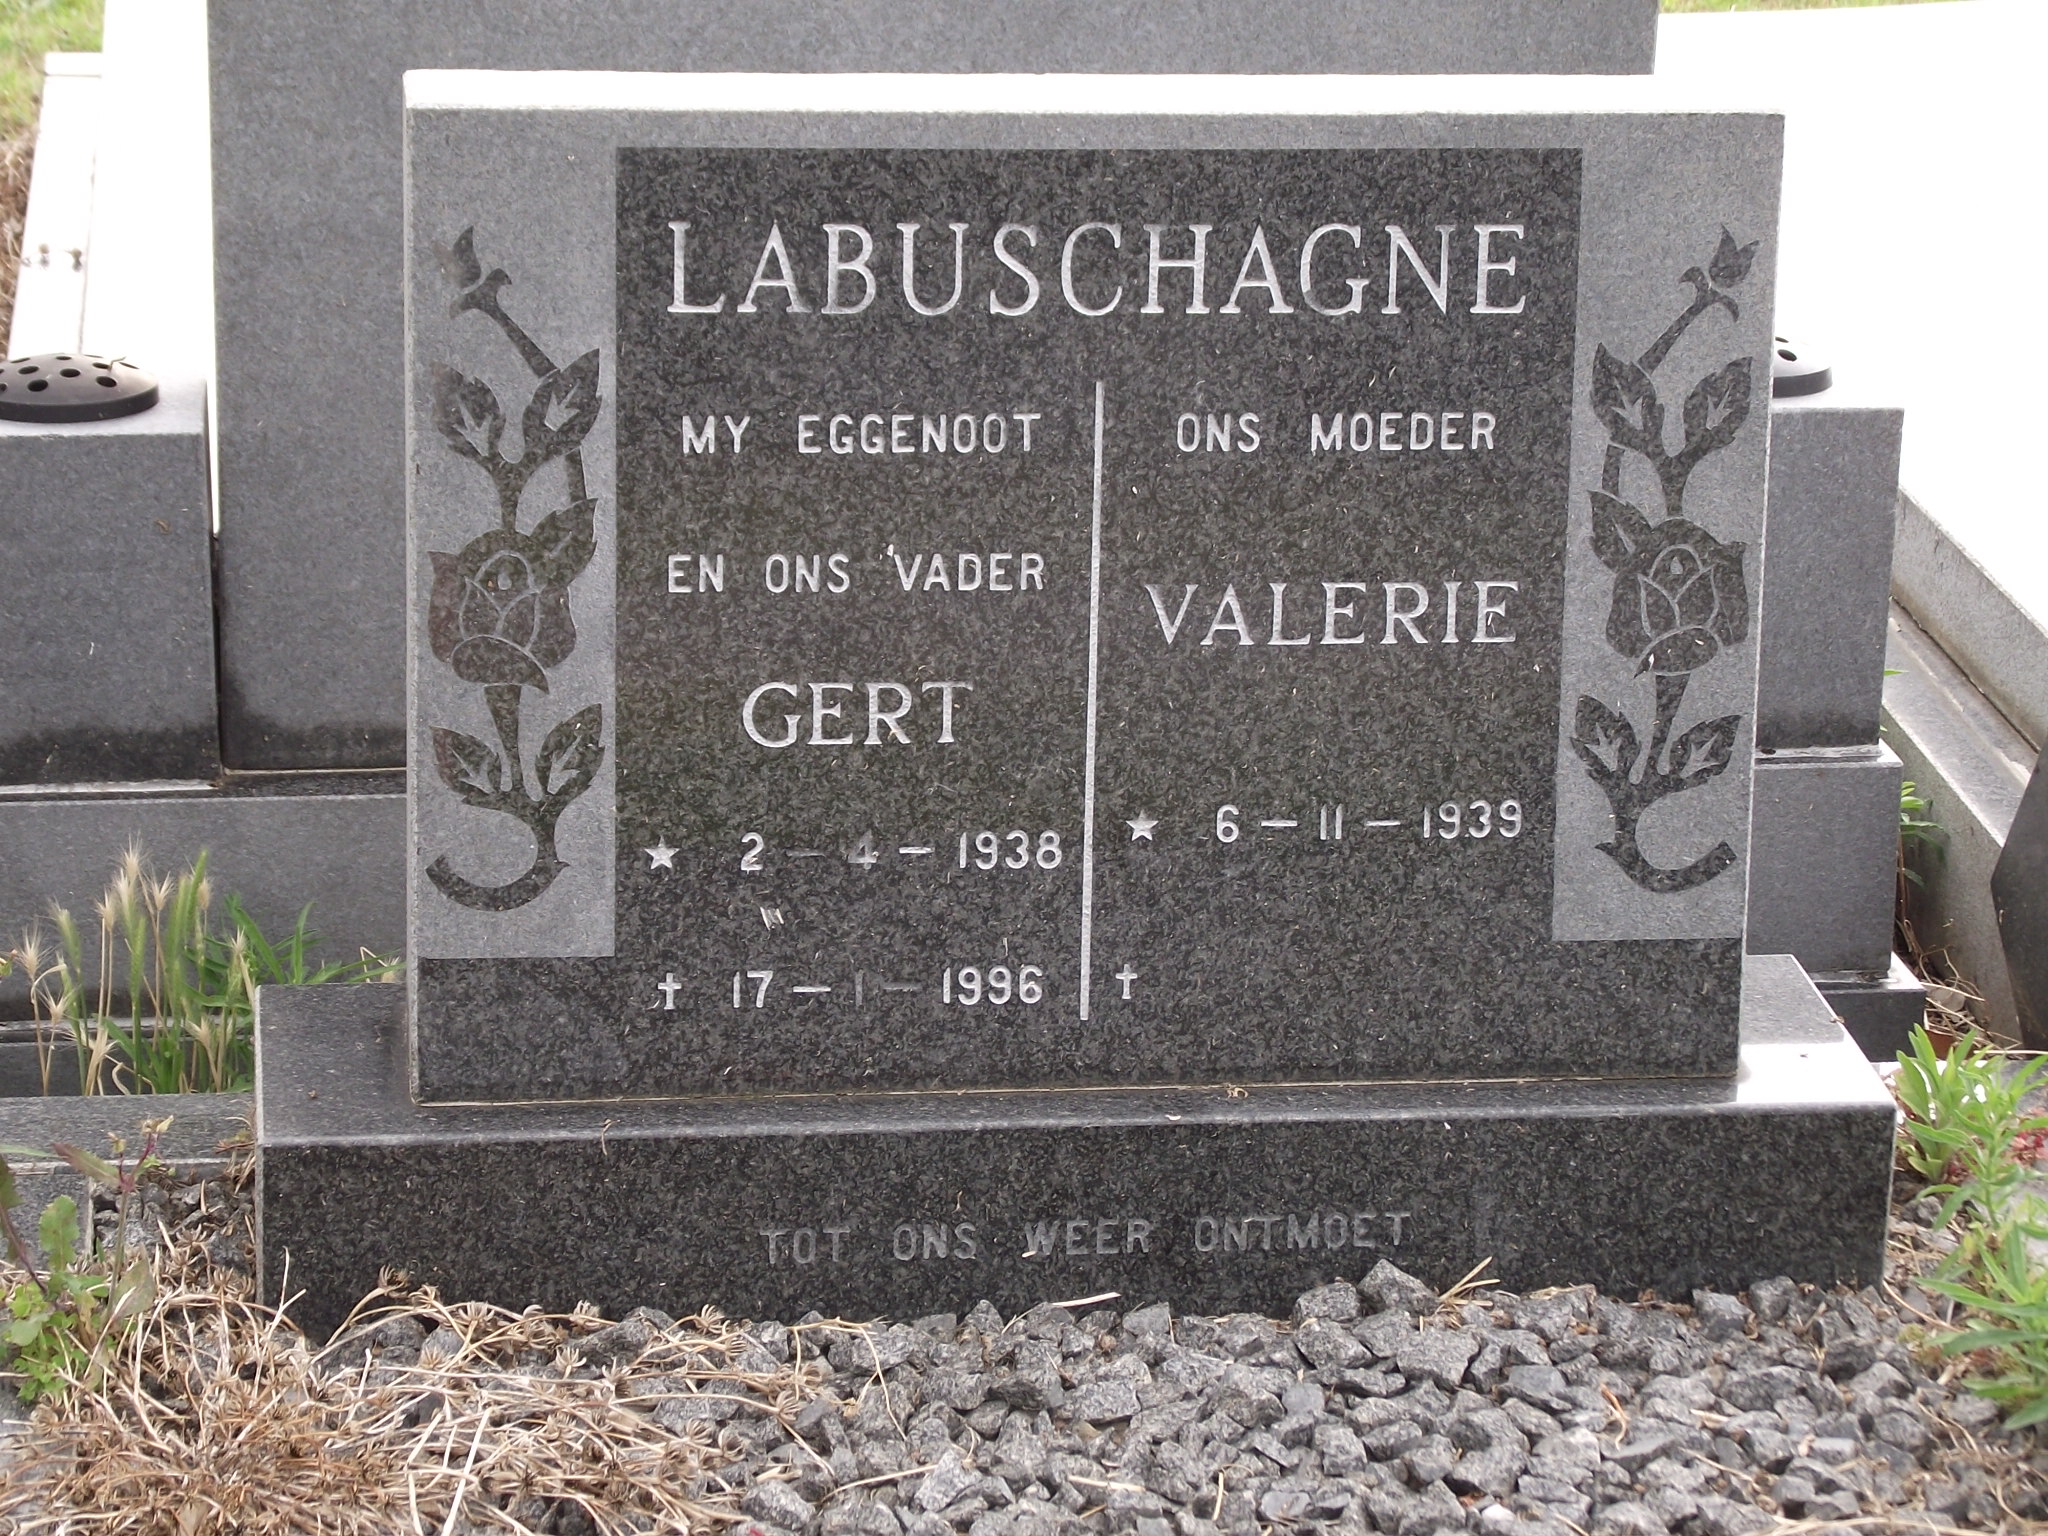 LABUSCHAGNE Gert 1938-1996 & Valerie 1939-